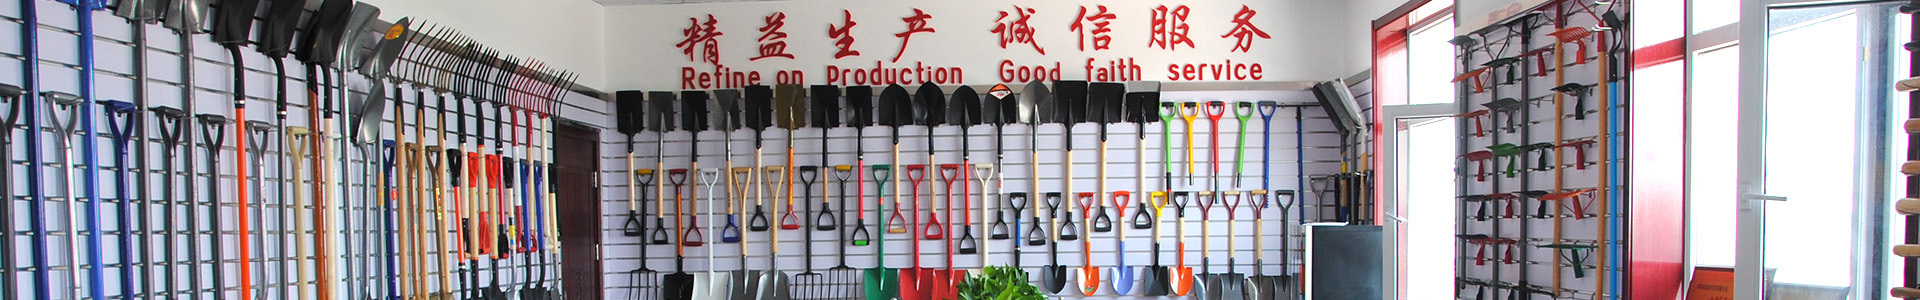 Xinfa Agricultural Tools